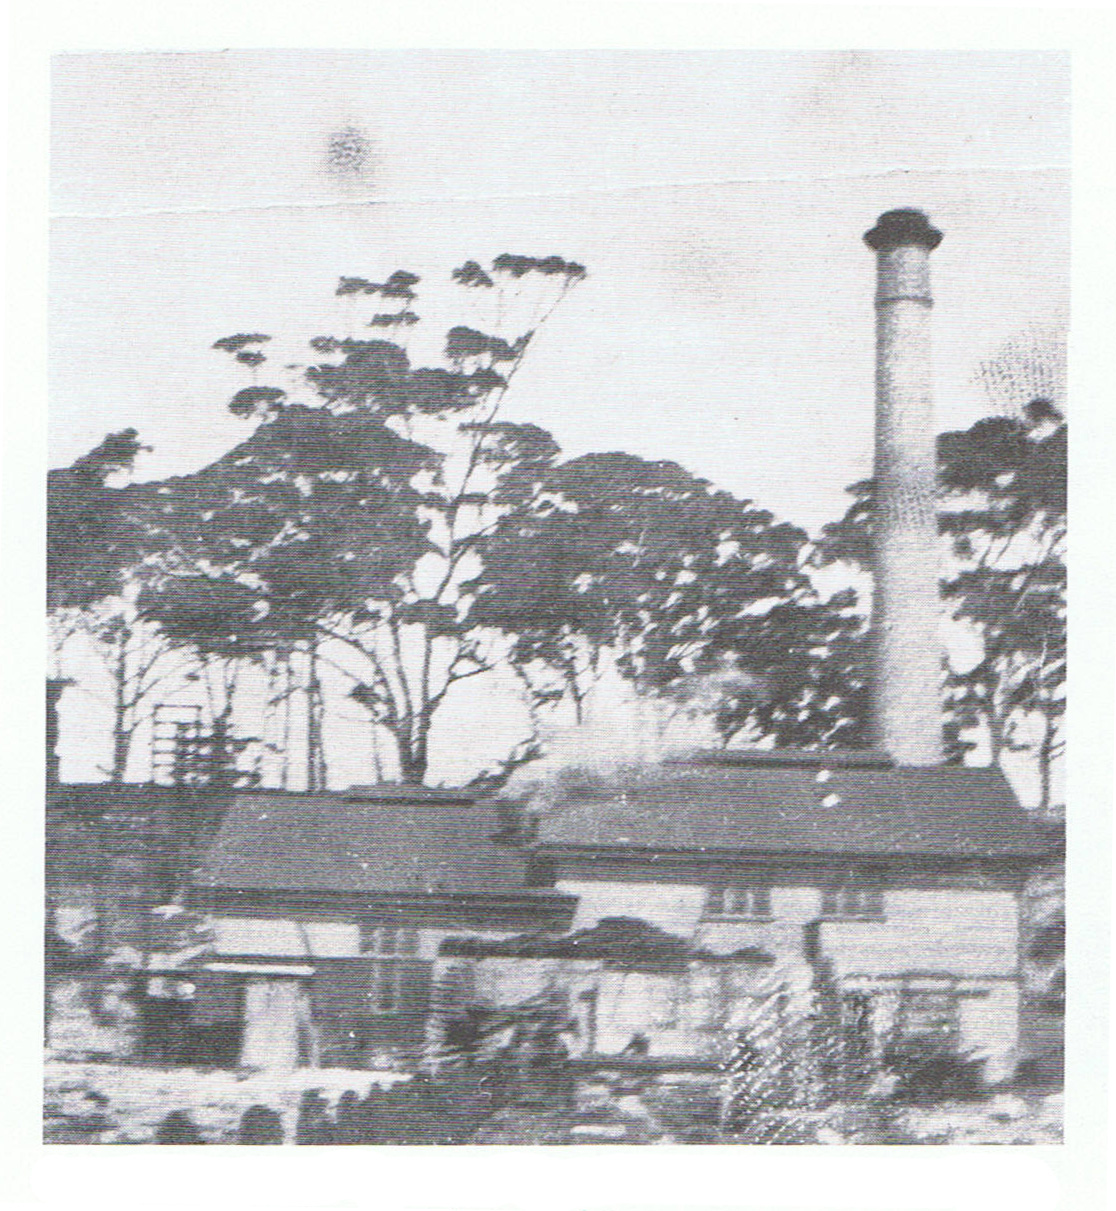  RANC, Jervis Bay 1913. Power house